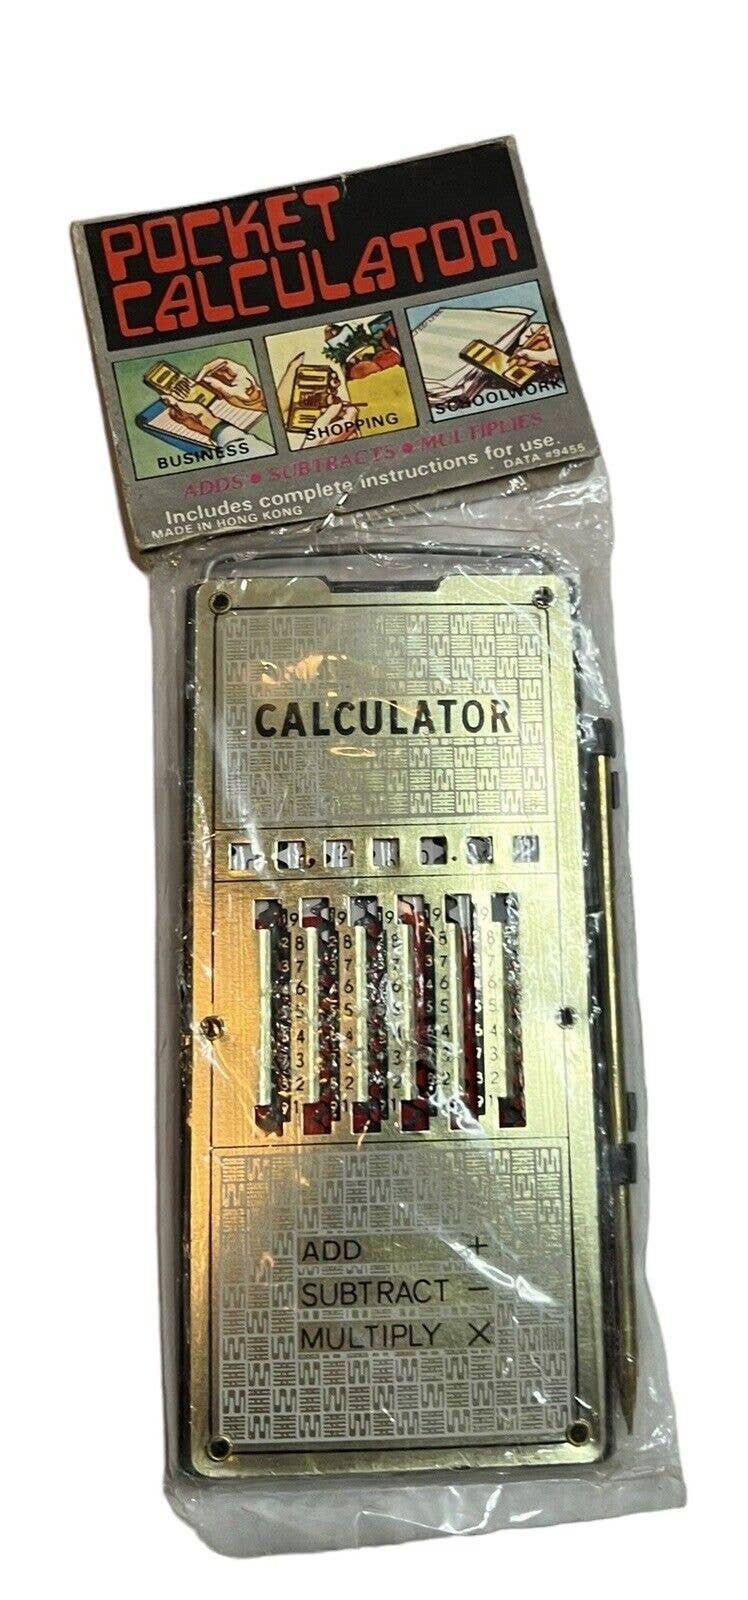 Vintage Pocket CALCULATOR Made in HONG KONG With Stylus Original Packaging  